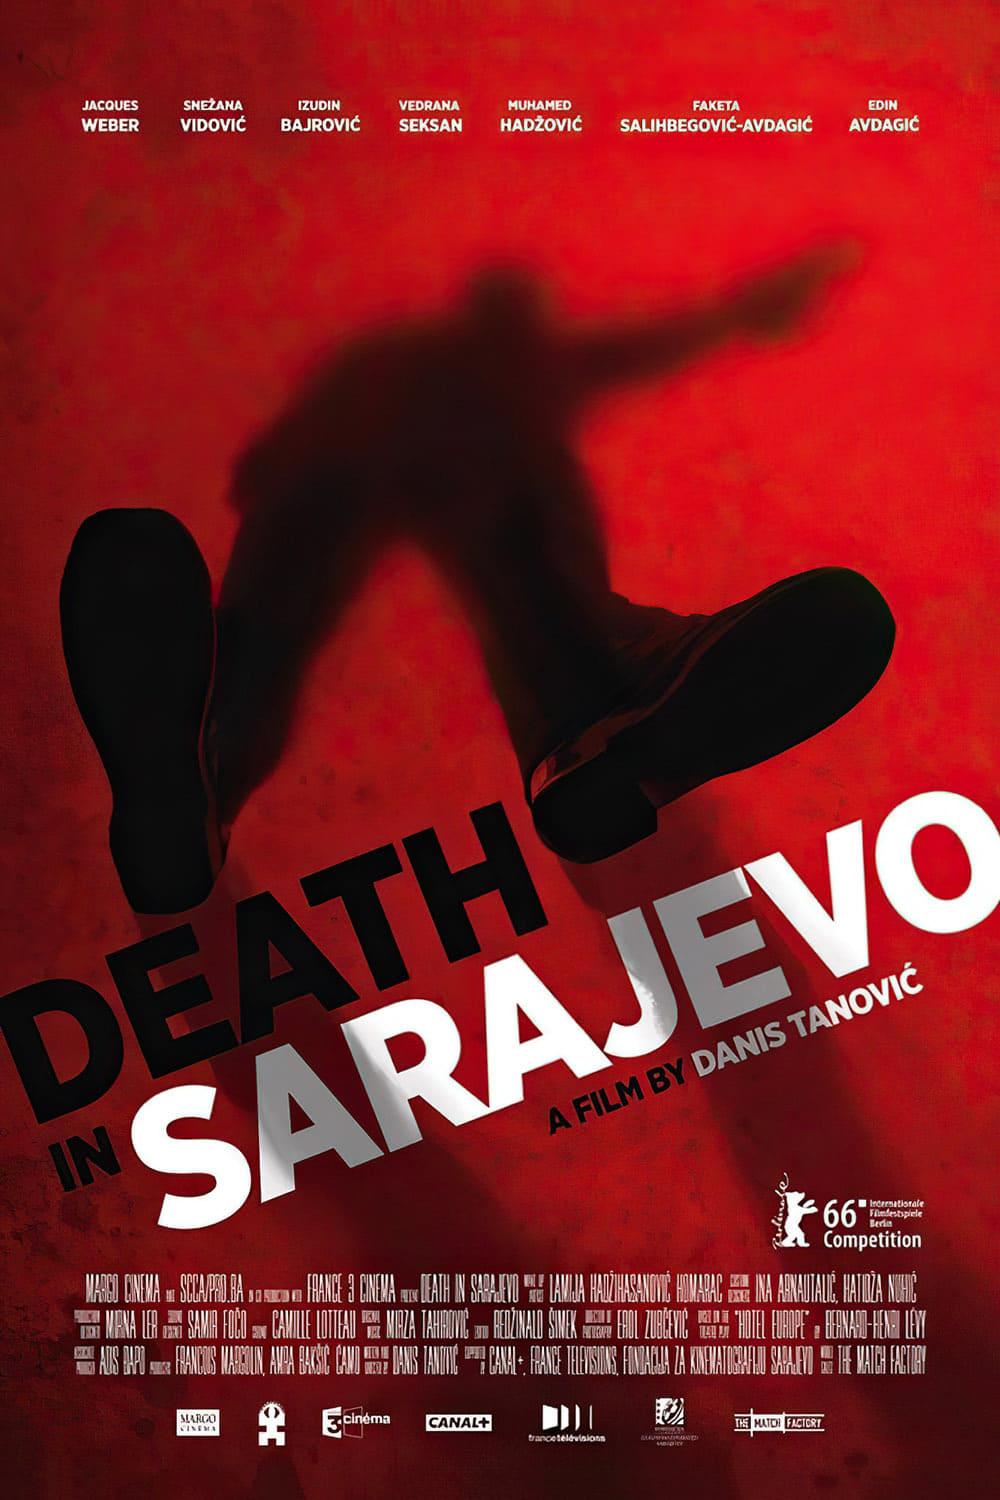 Death in Sarajevo poster